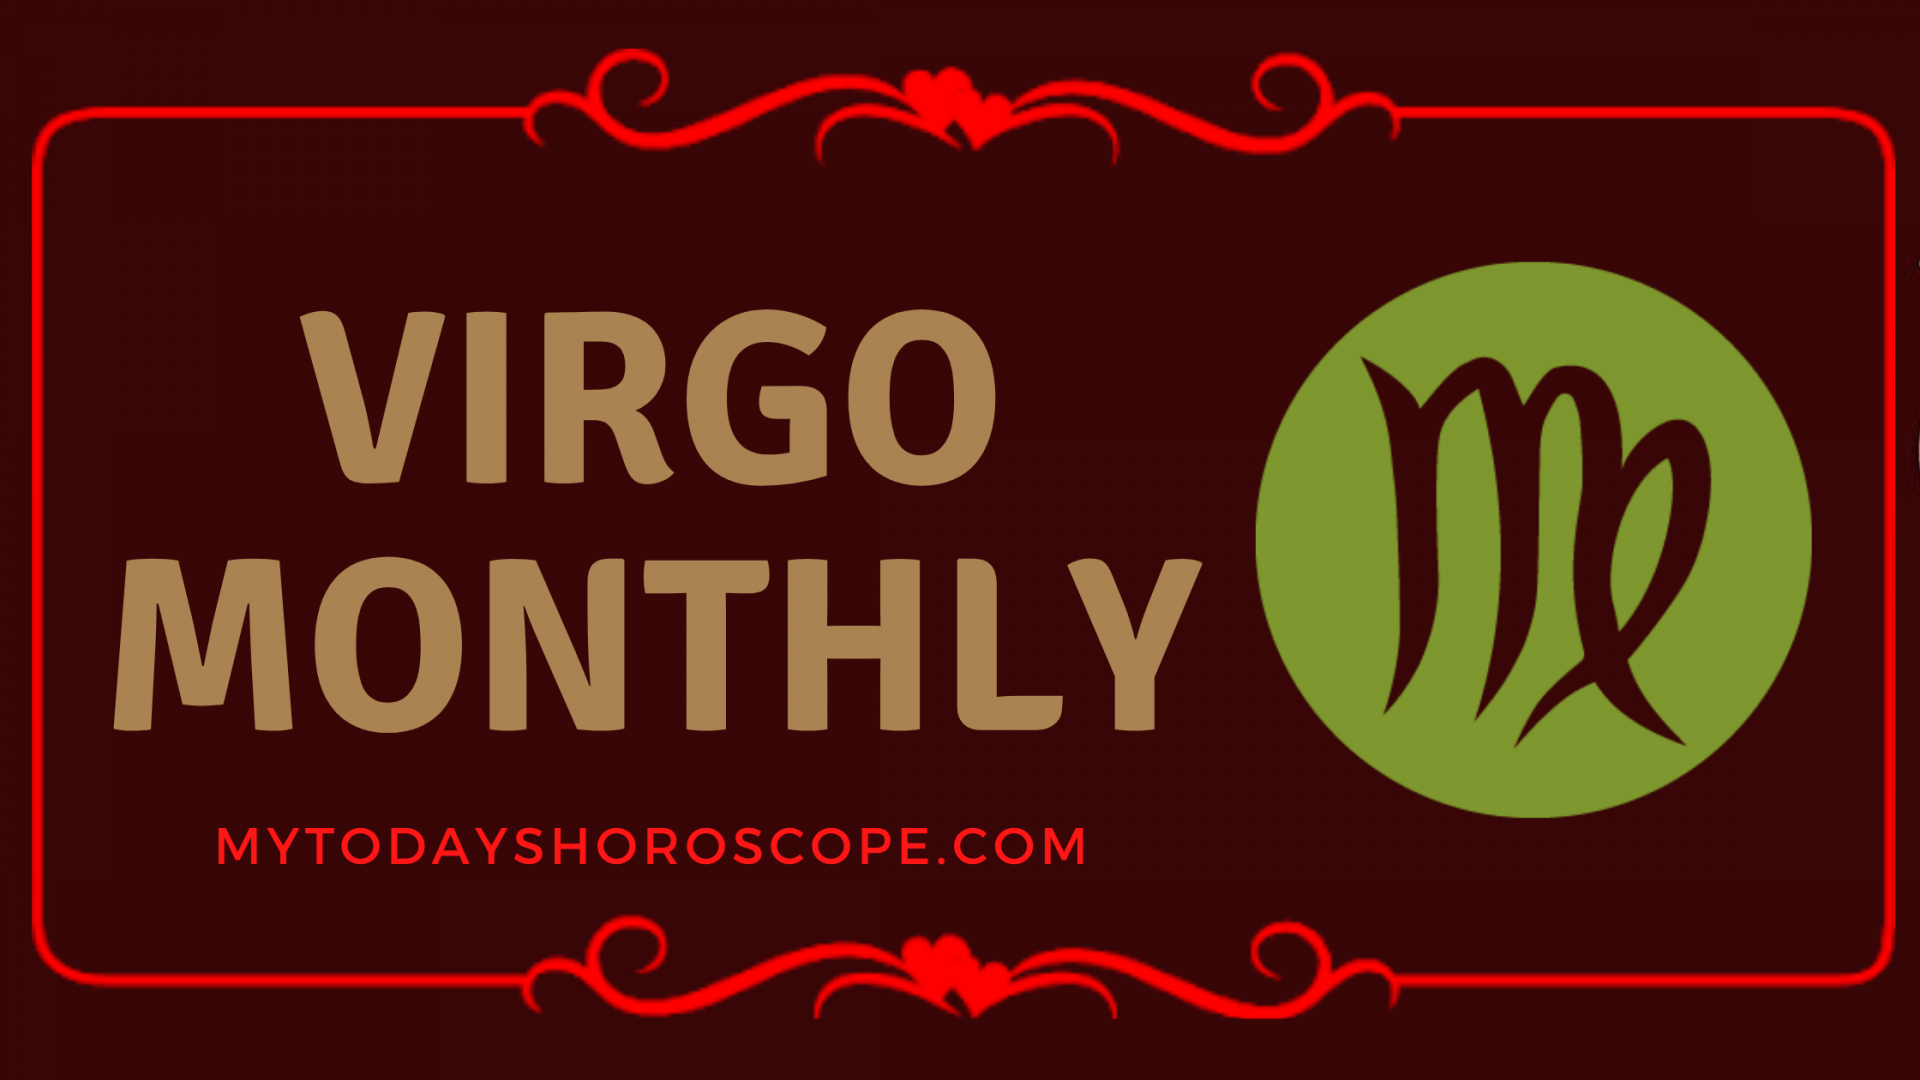 VIRGO Horoscope February 2021 - Astrological Prediction for Love, Money, Career and Health